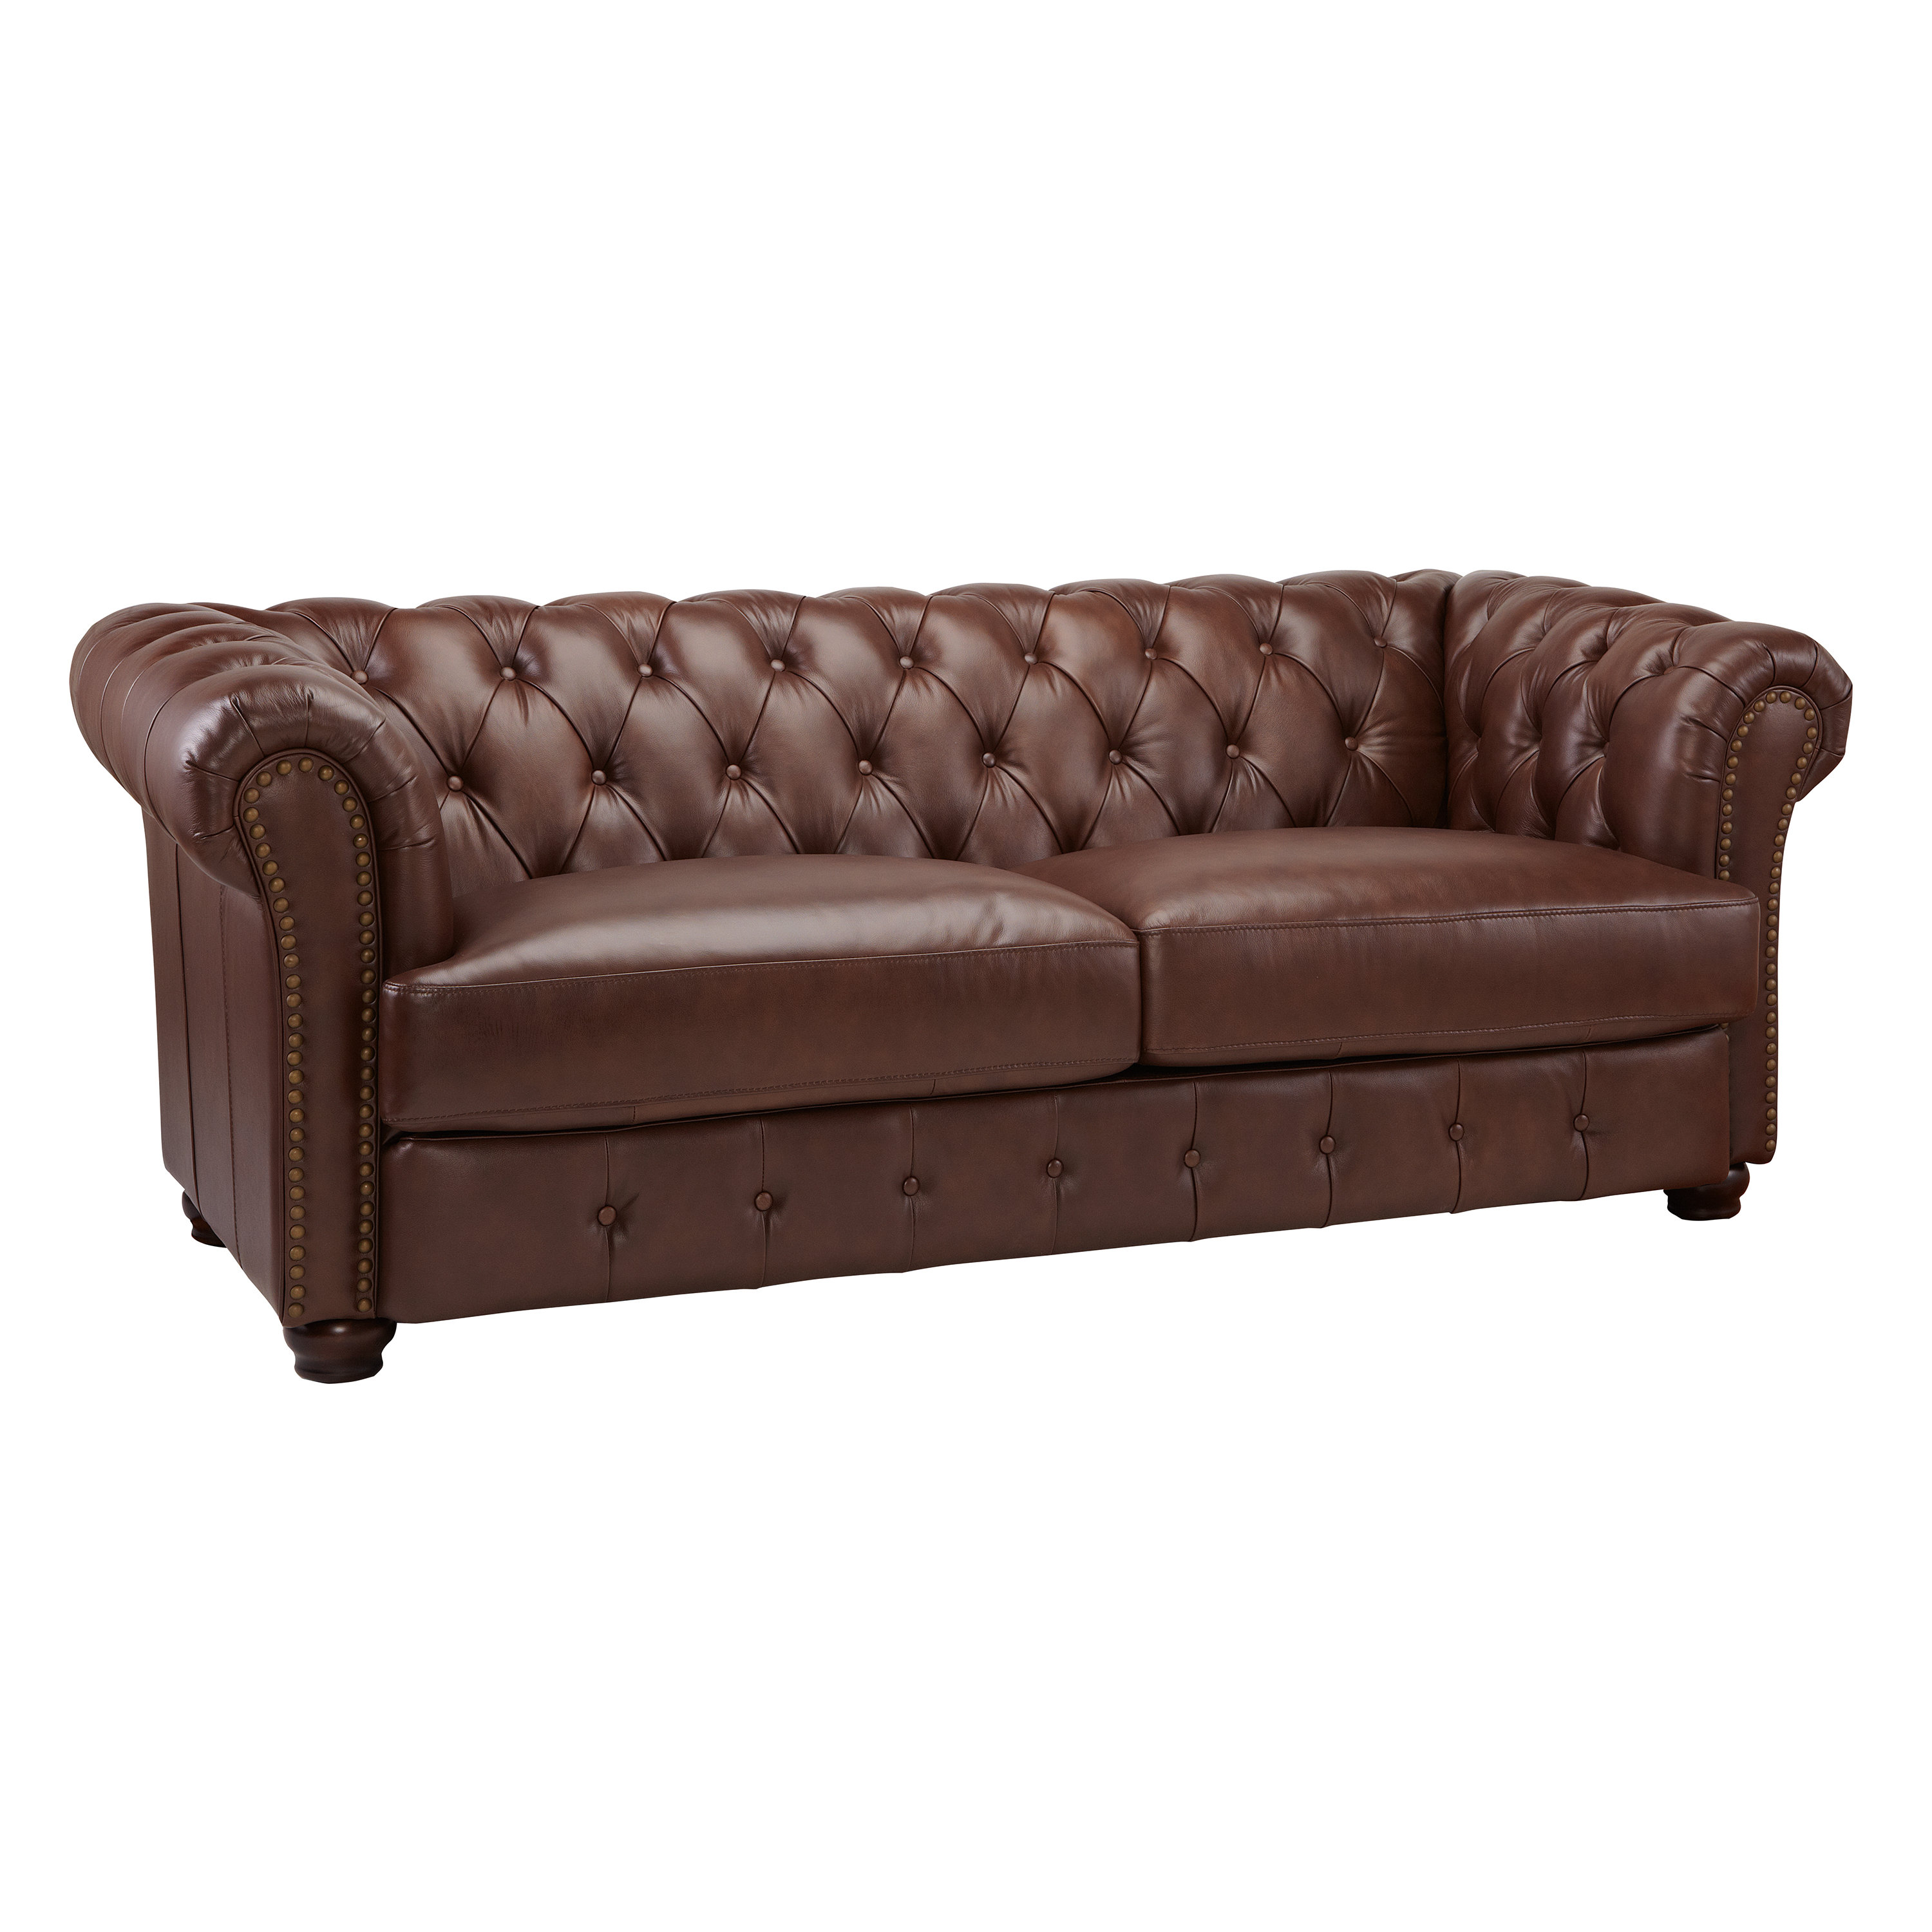 Decoro Leather Furniture 76